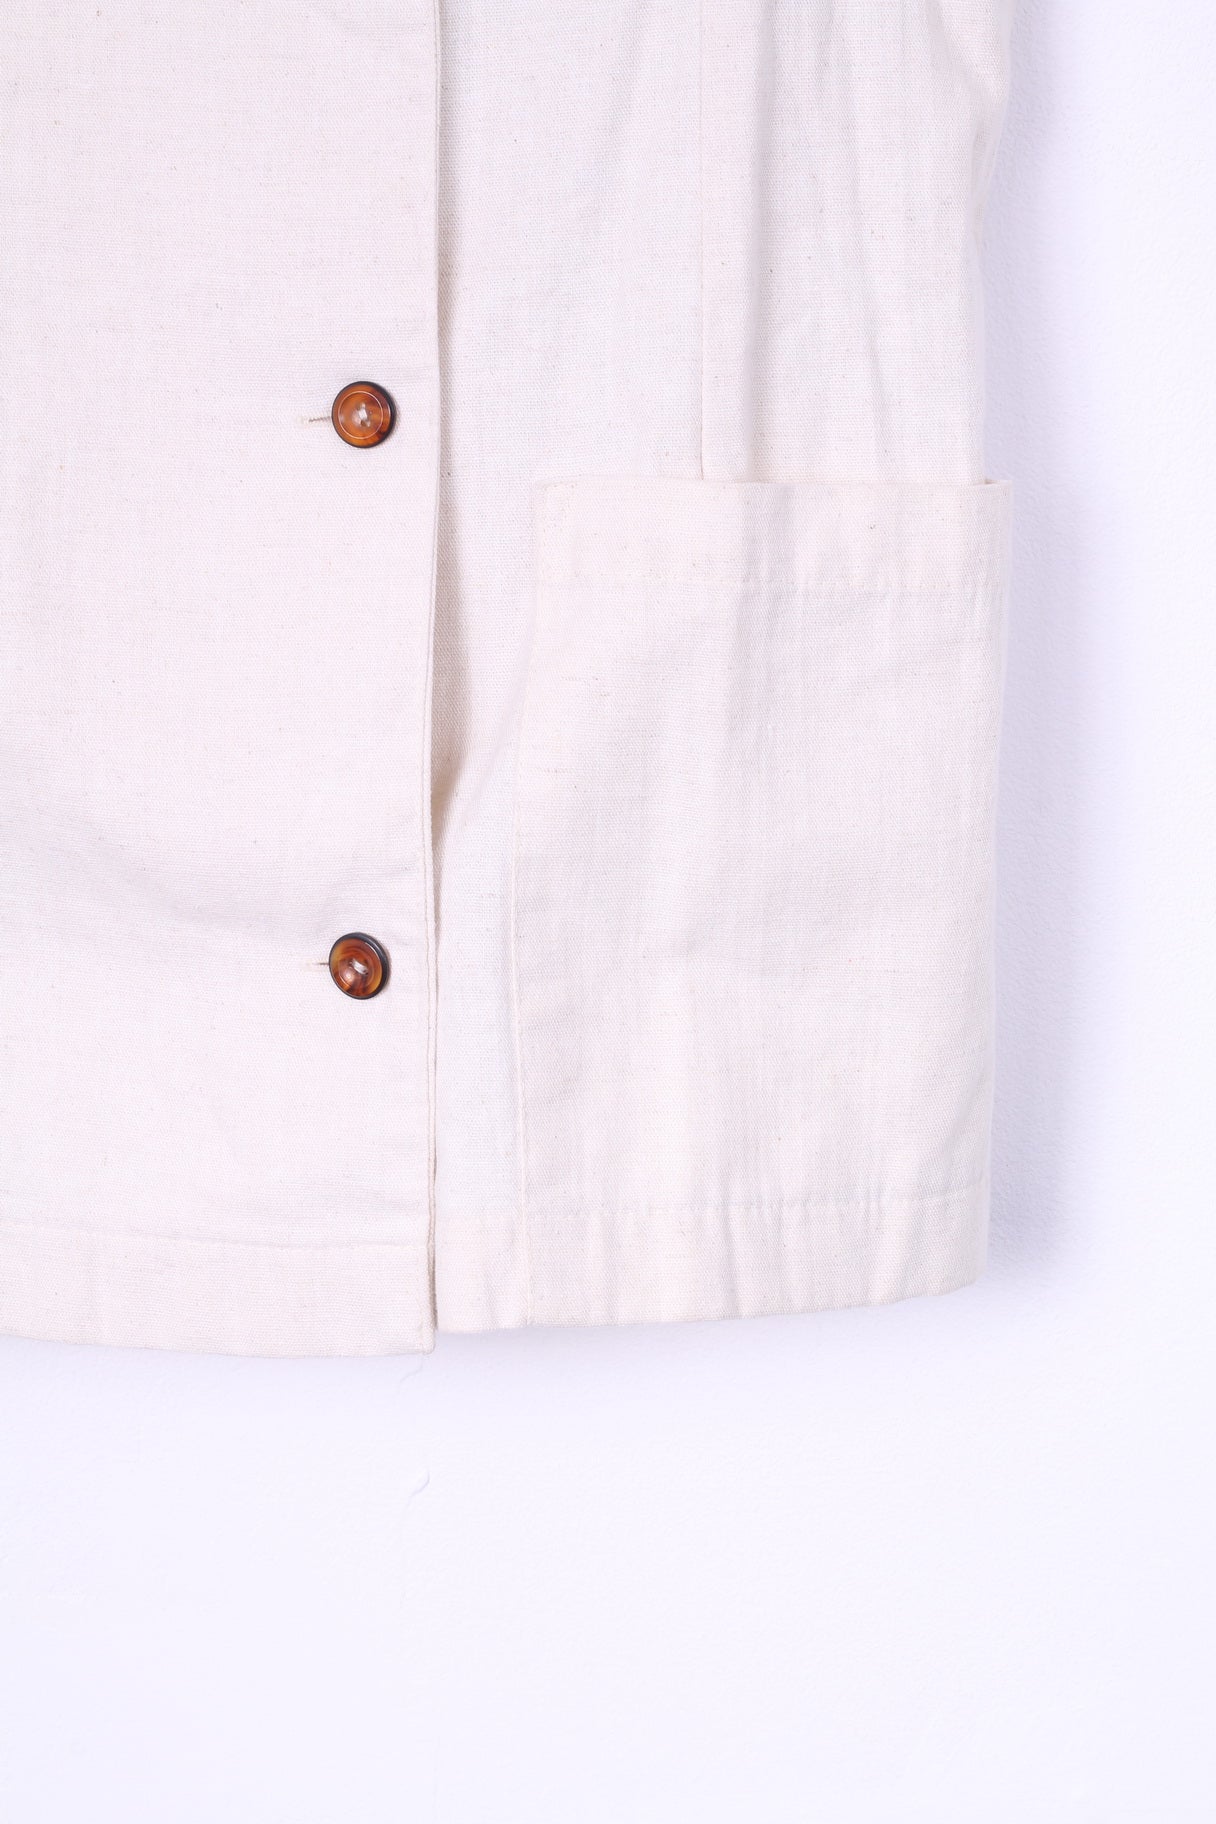 Mia Cassara Roma Womens 12 M Suit Pencil Skirt Blazer Beige Cotton Linen 2 Piece